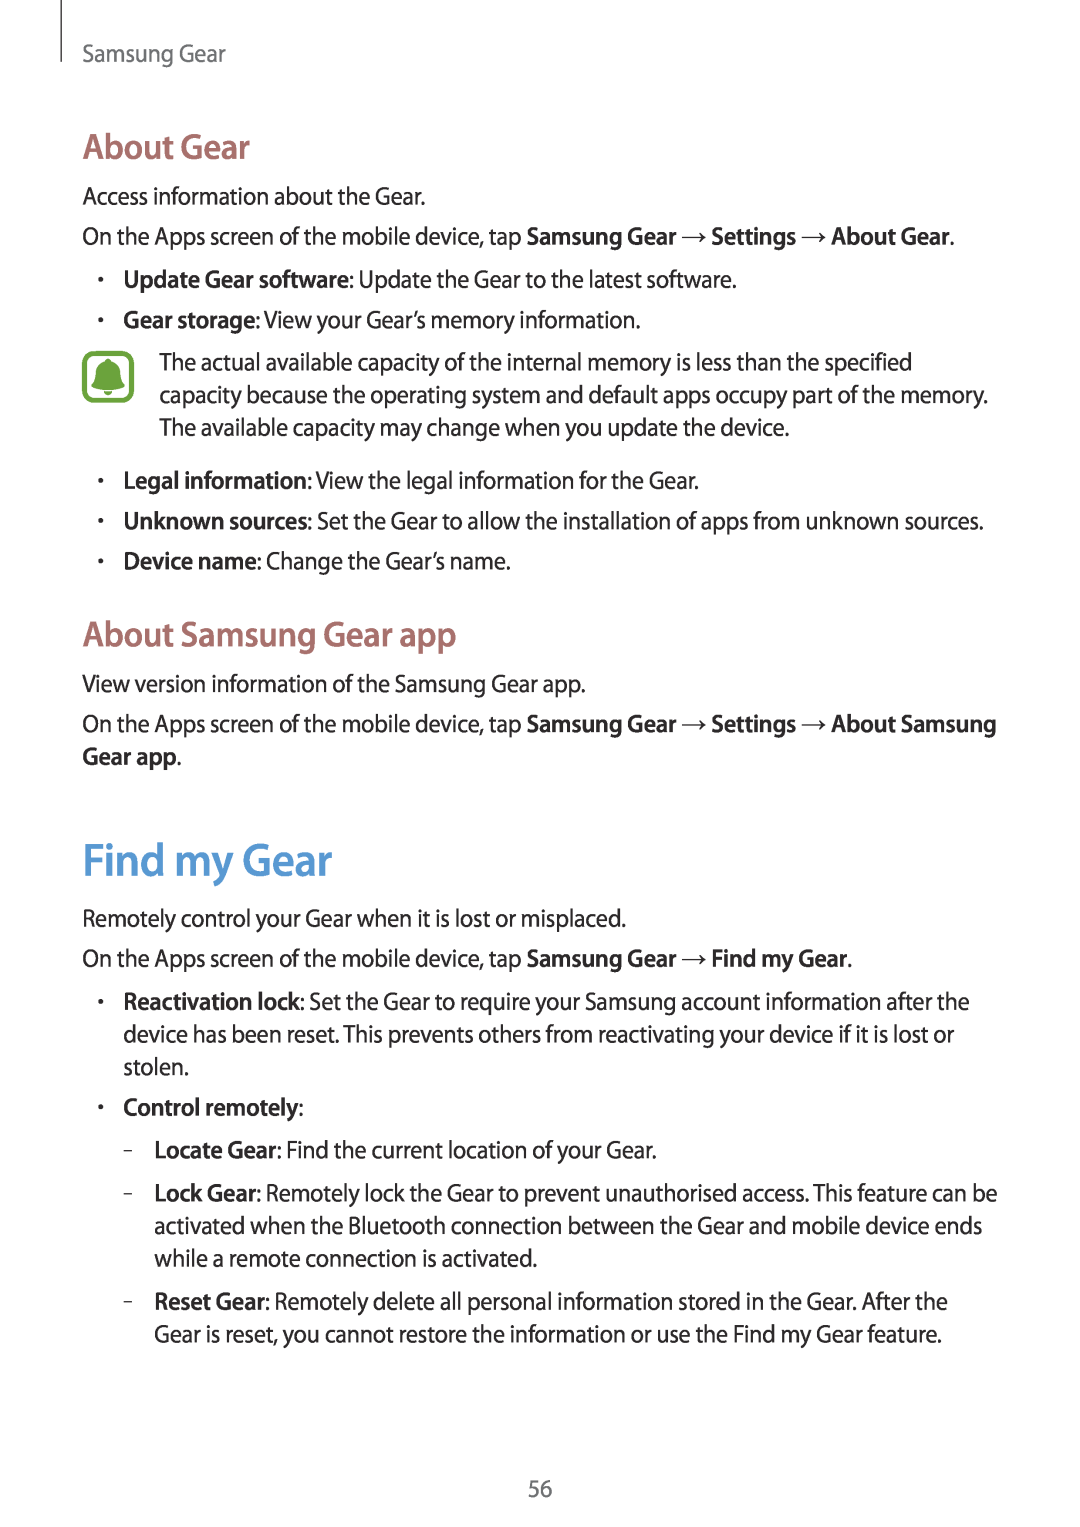 Samsung SM-R3600ZIADBT, SM-R3600ZBADBT, SM-R3600ZINDBT Find my Gear, About Gear, About Samsung Gear app, Control remotely 